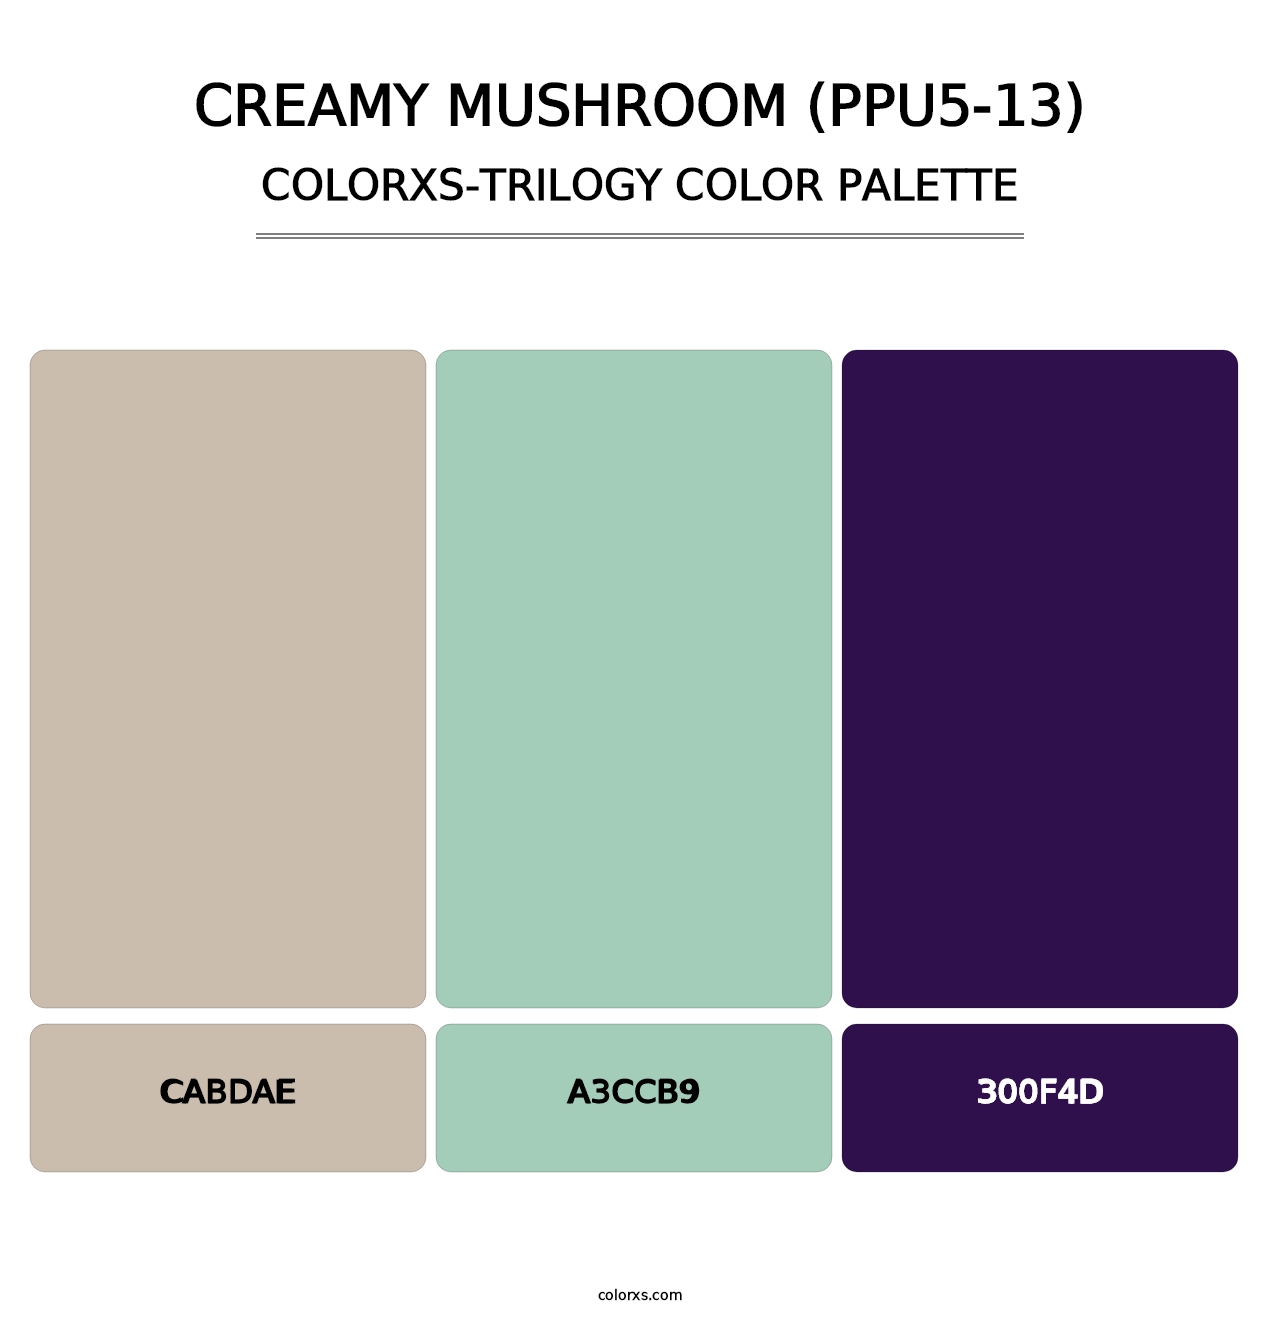 Creamy Mushroom (PPU5-13) - Colorxs Trilogy Palette